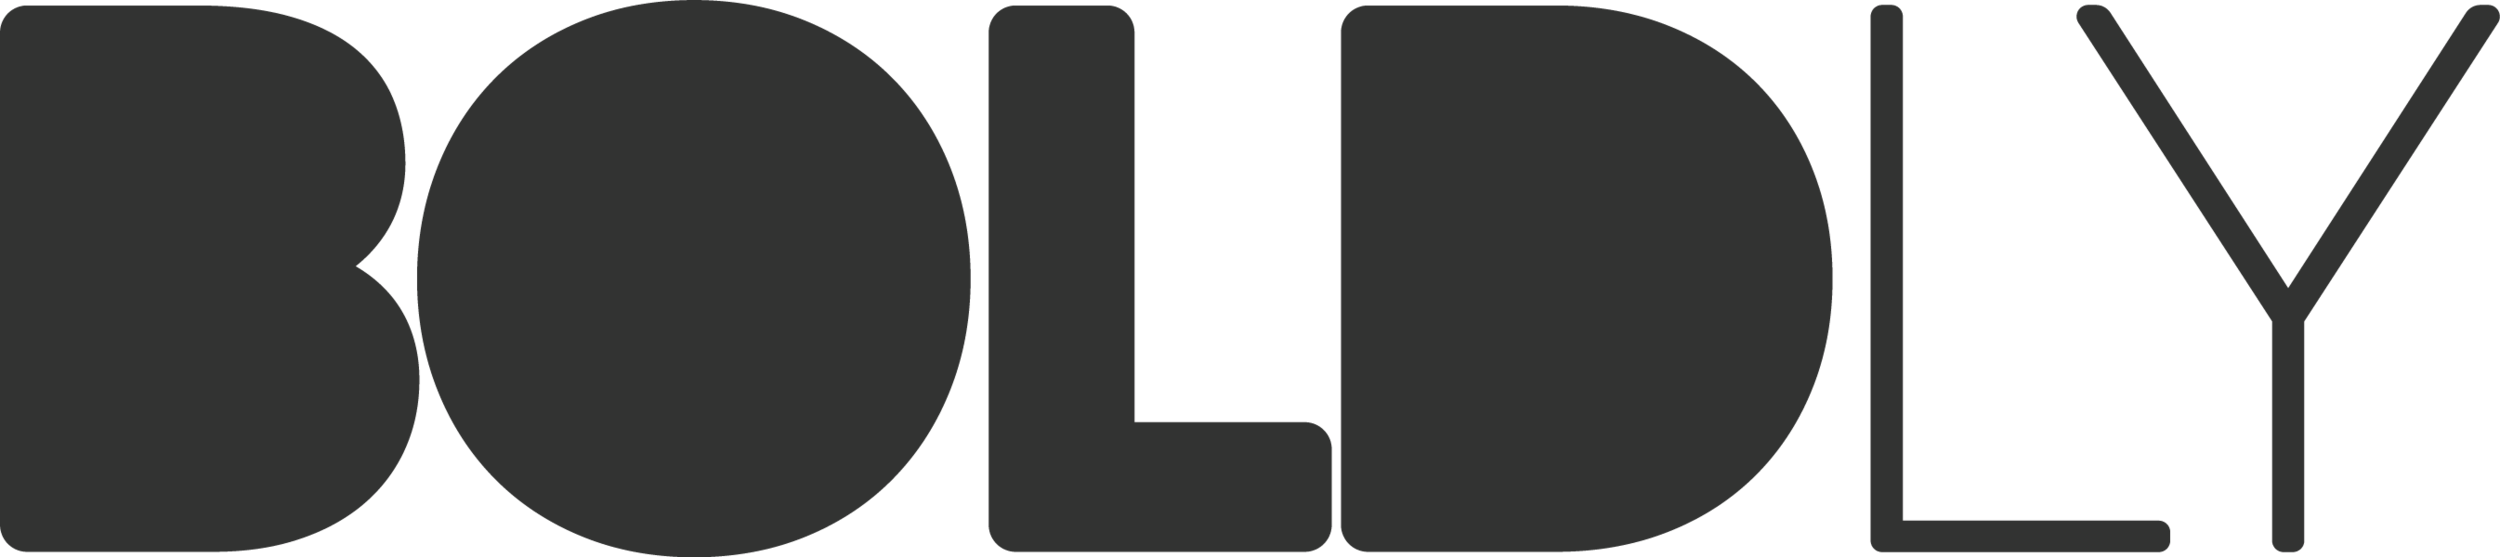 boldly-logo-lg.png